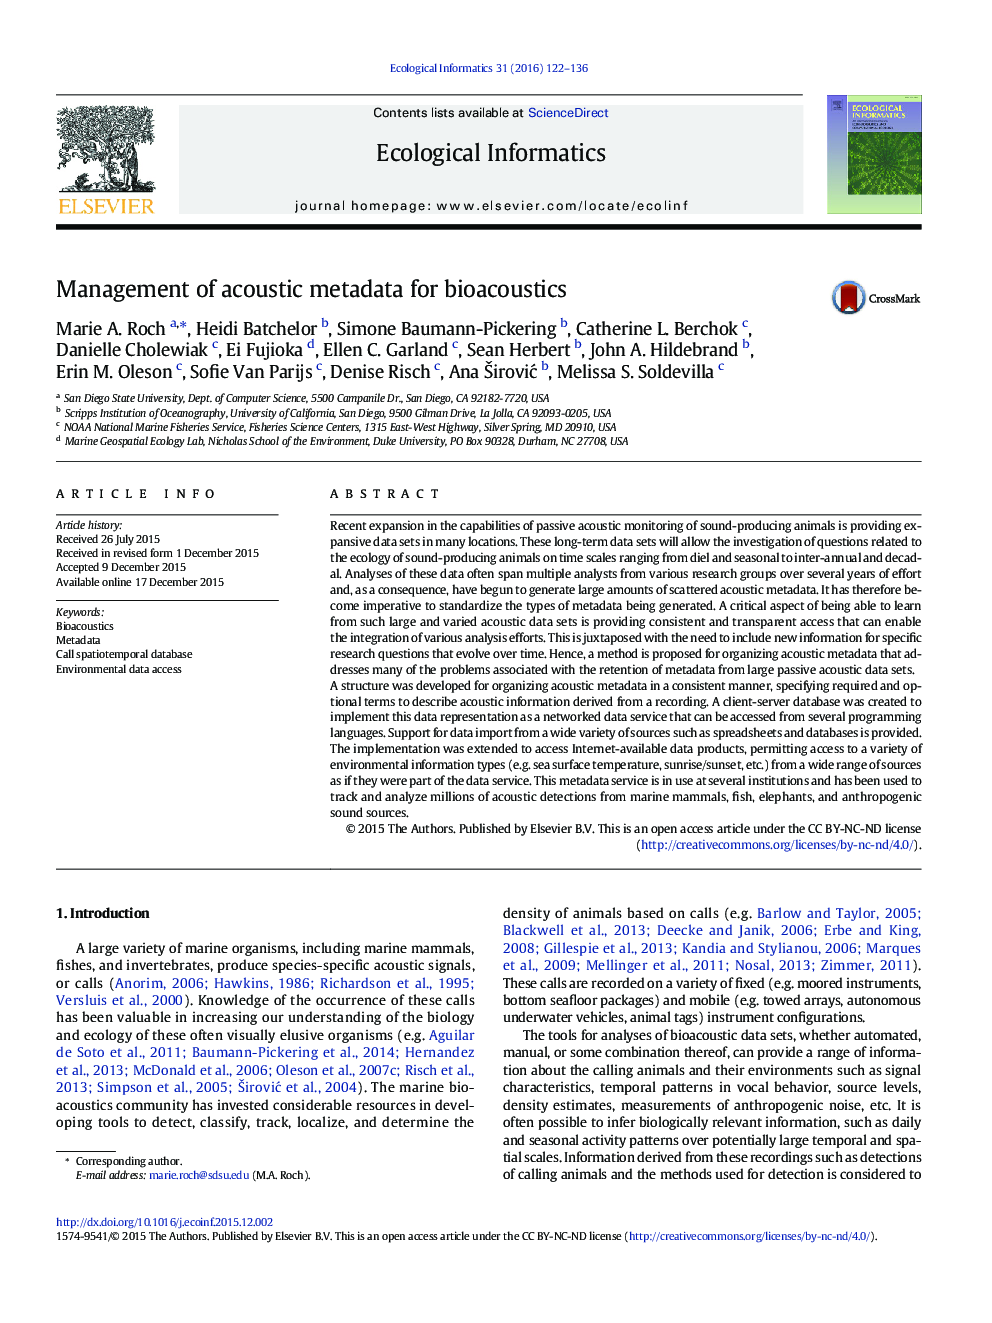 Management of acoustic metadata for bioacoustics